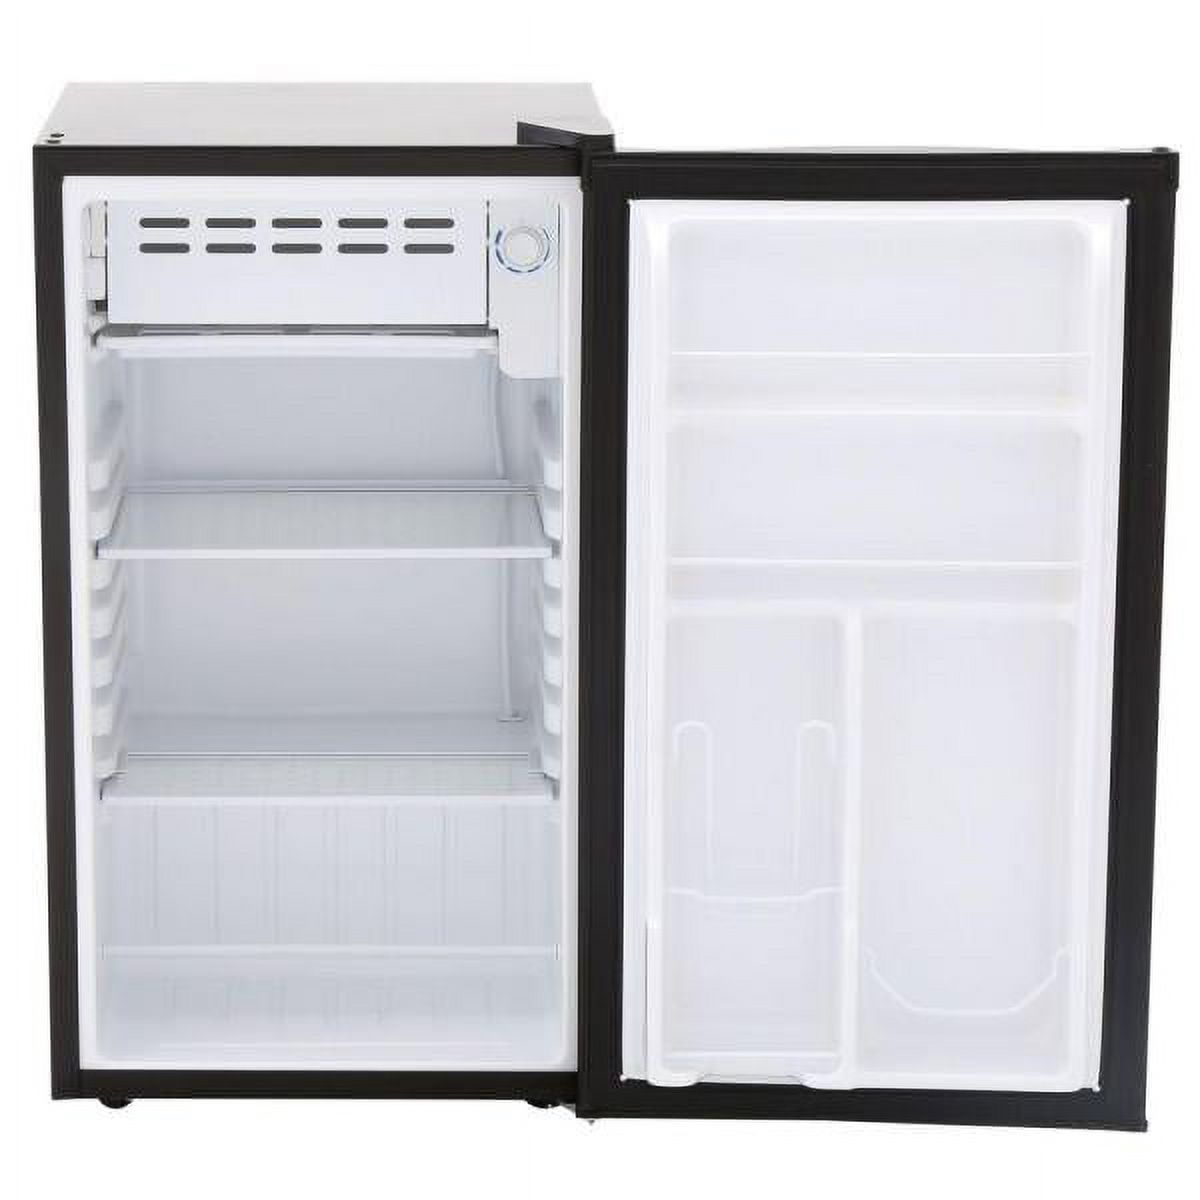 IGLOO 3.2 cu. ft. Mini Refrigerator in Black-FR320-BLACK - image 2 of 7